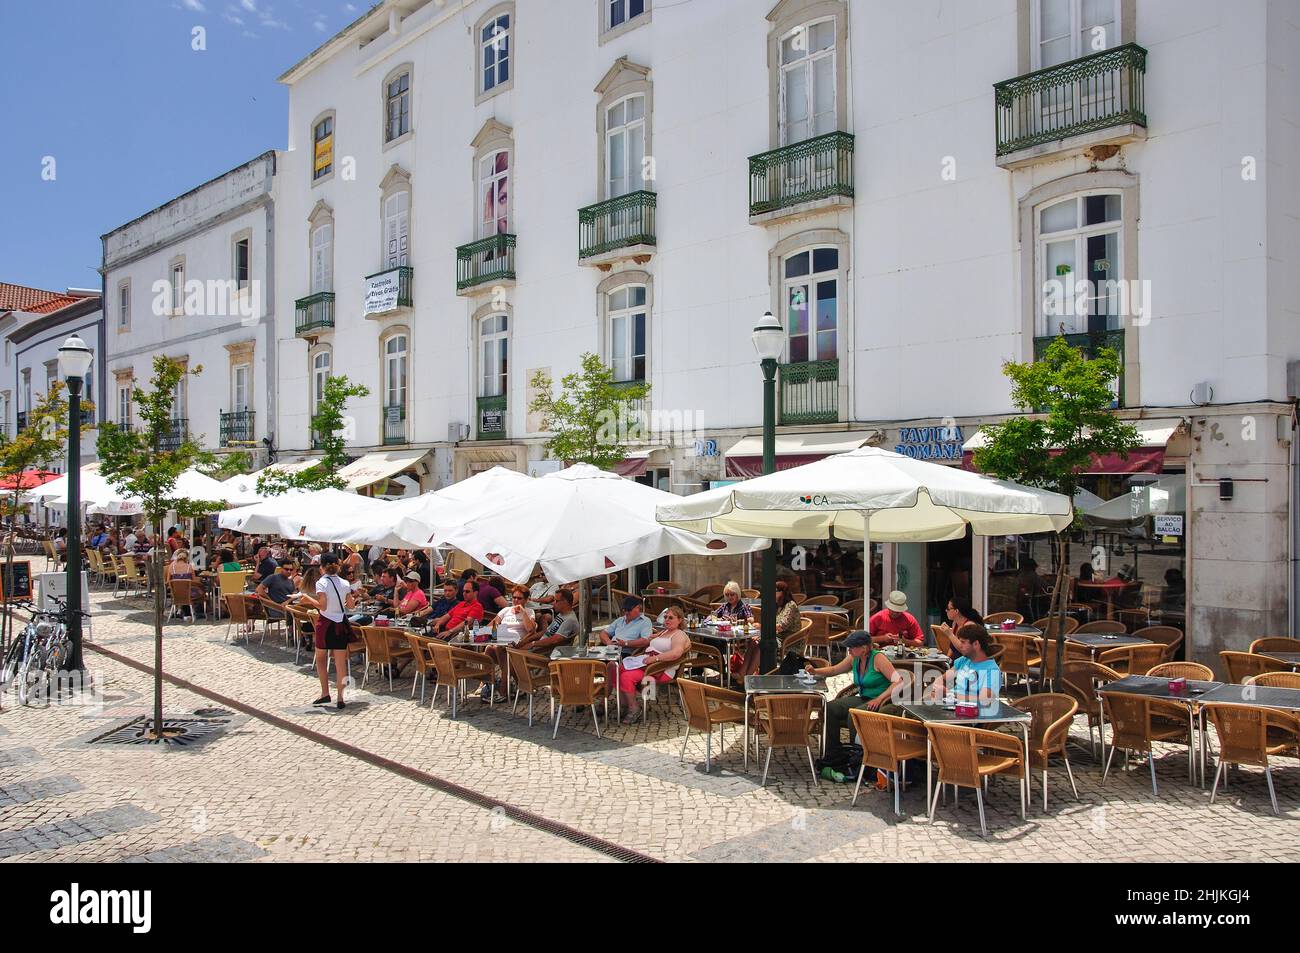 Outdoor restaurant, Praca da Republic, Tavira, Algarve Region, Portugal Stock Photo